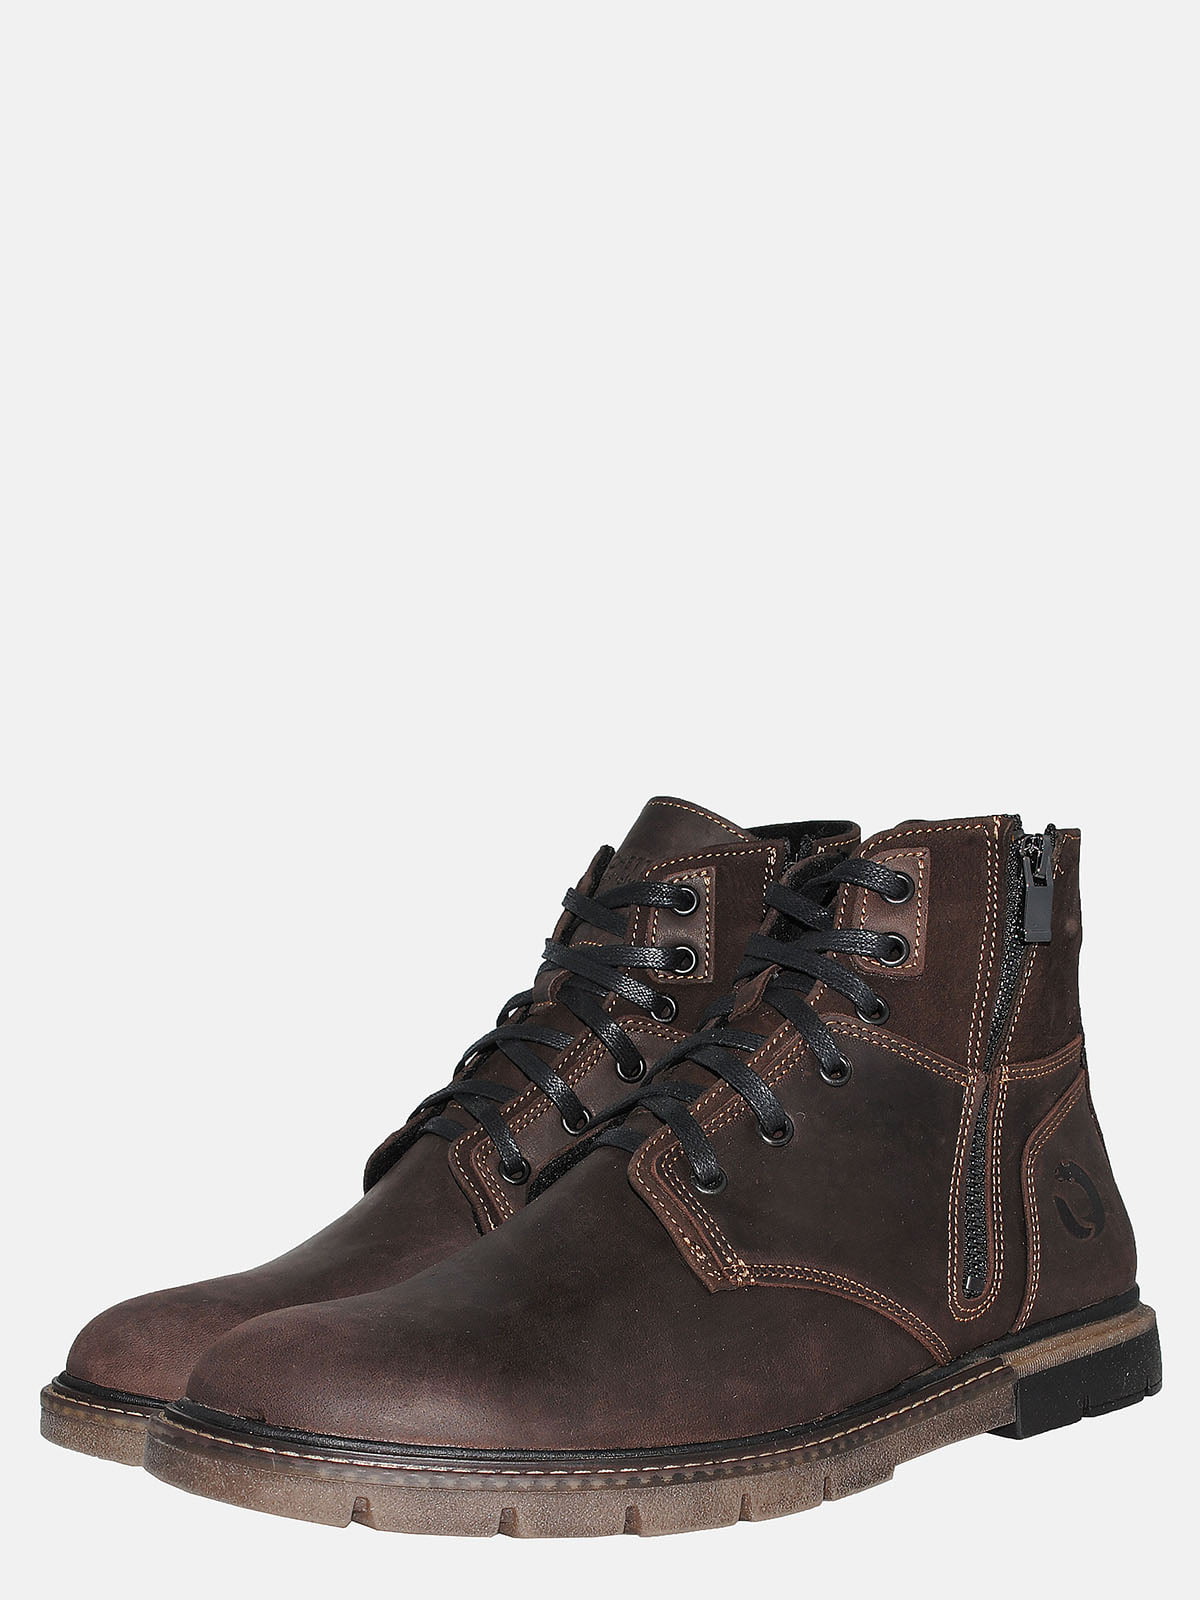 Ботинки коричневые | 5553427